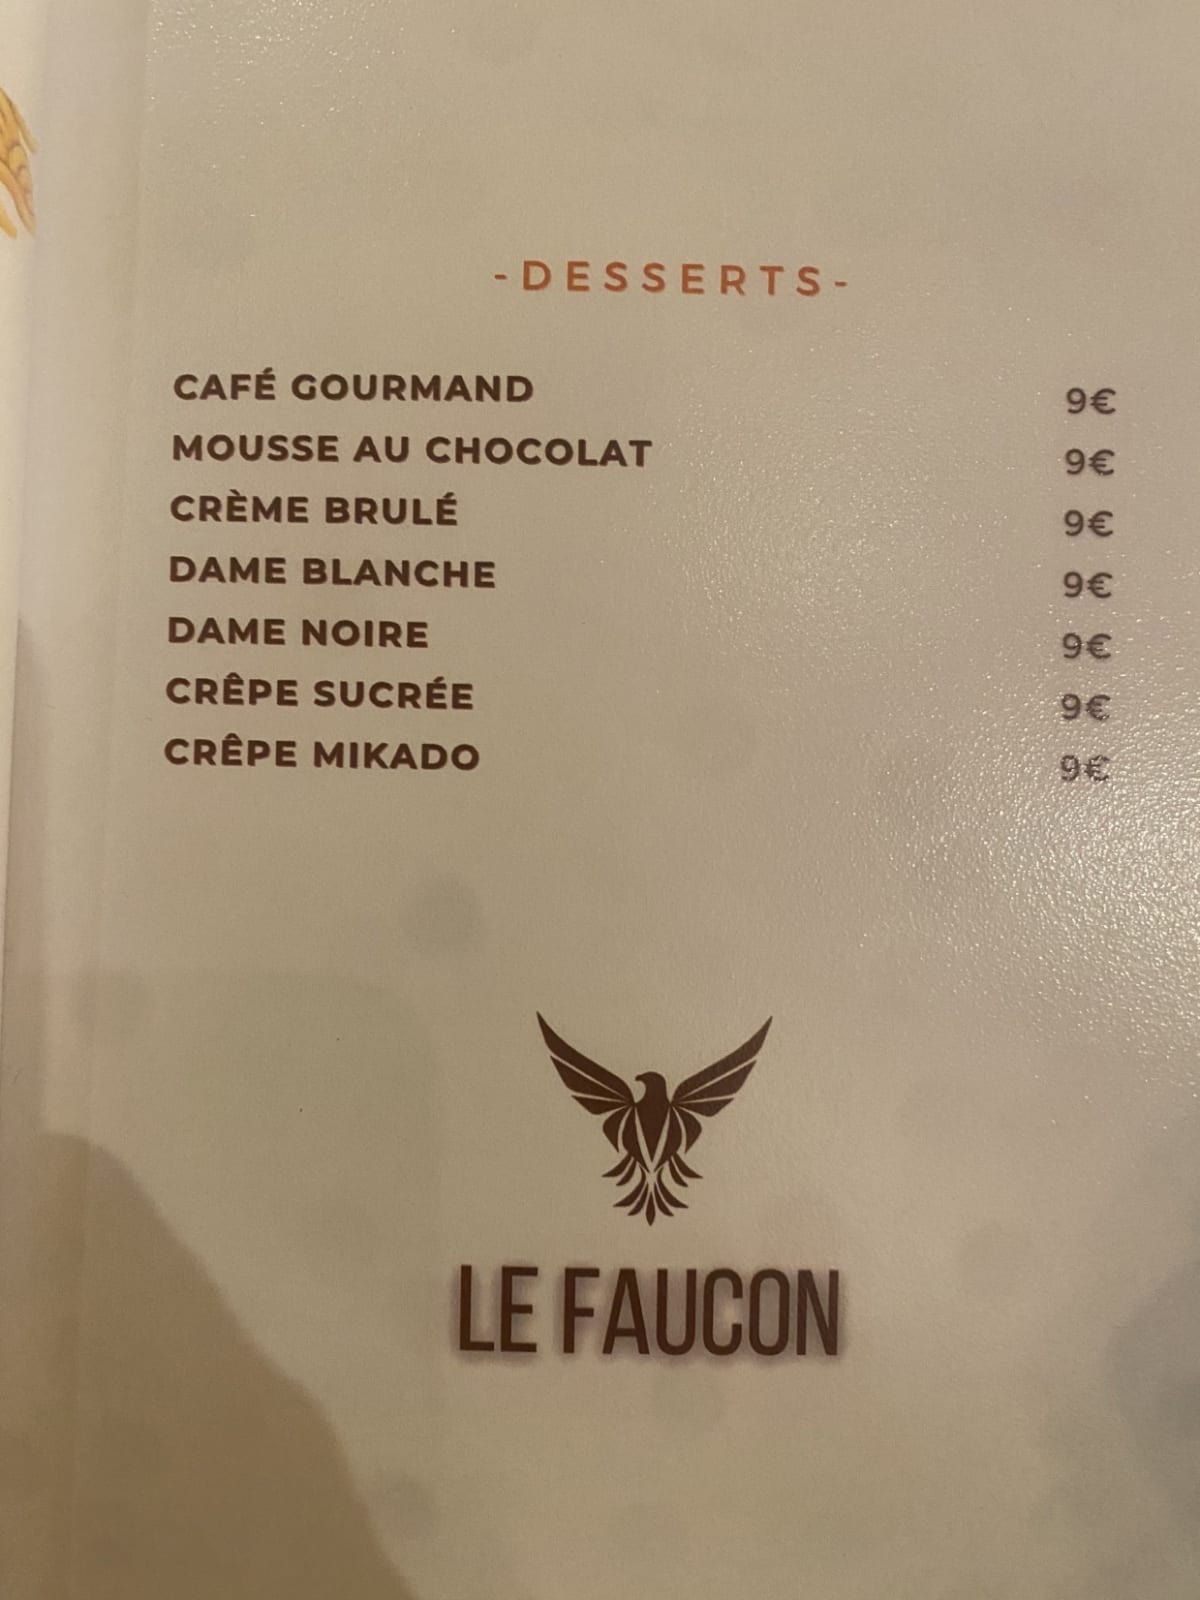 Le Faucon menu